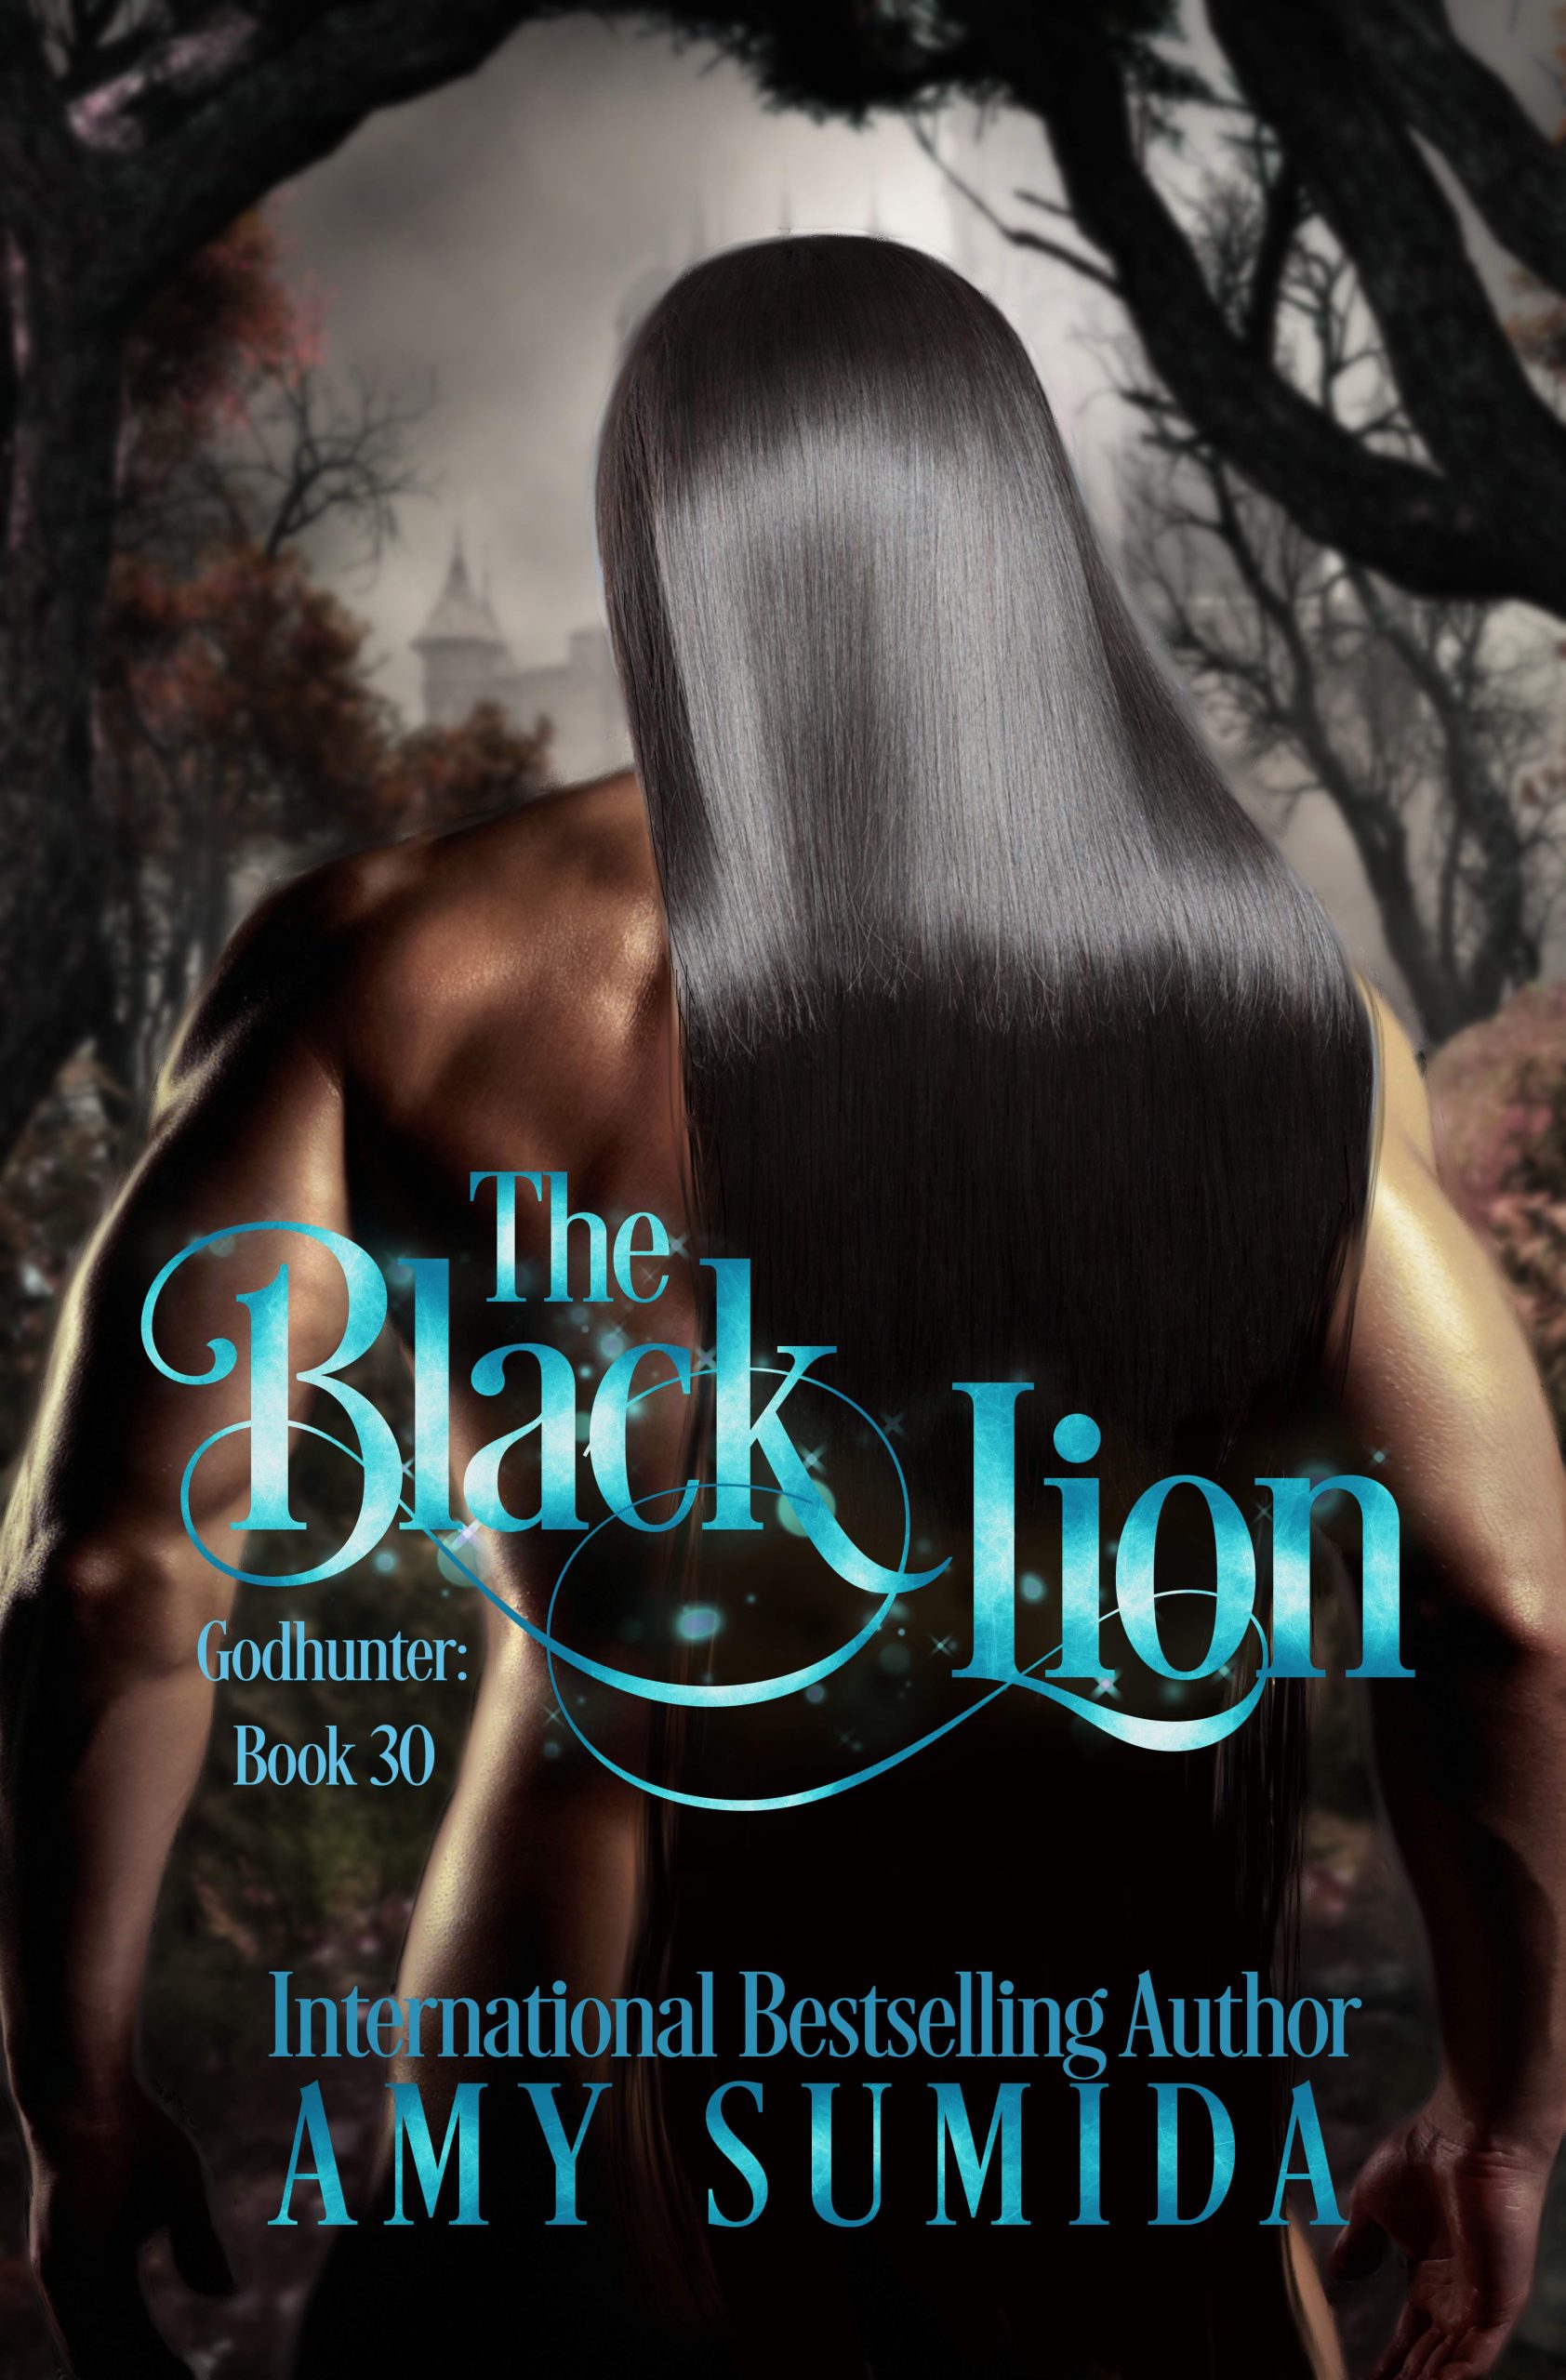 The Black Lion book cover - Godhunter Book 30